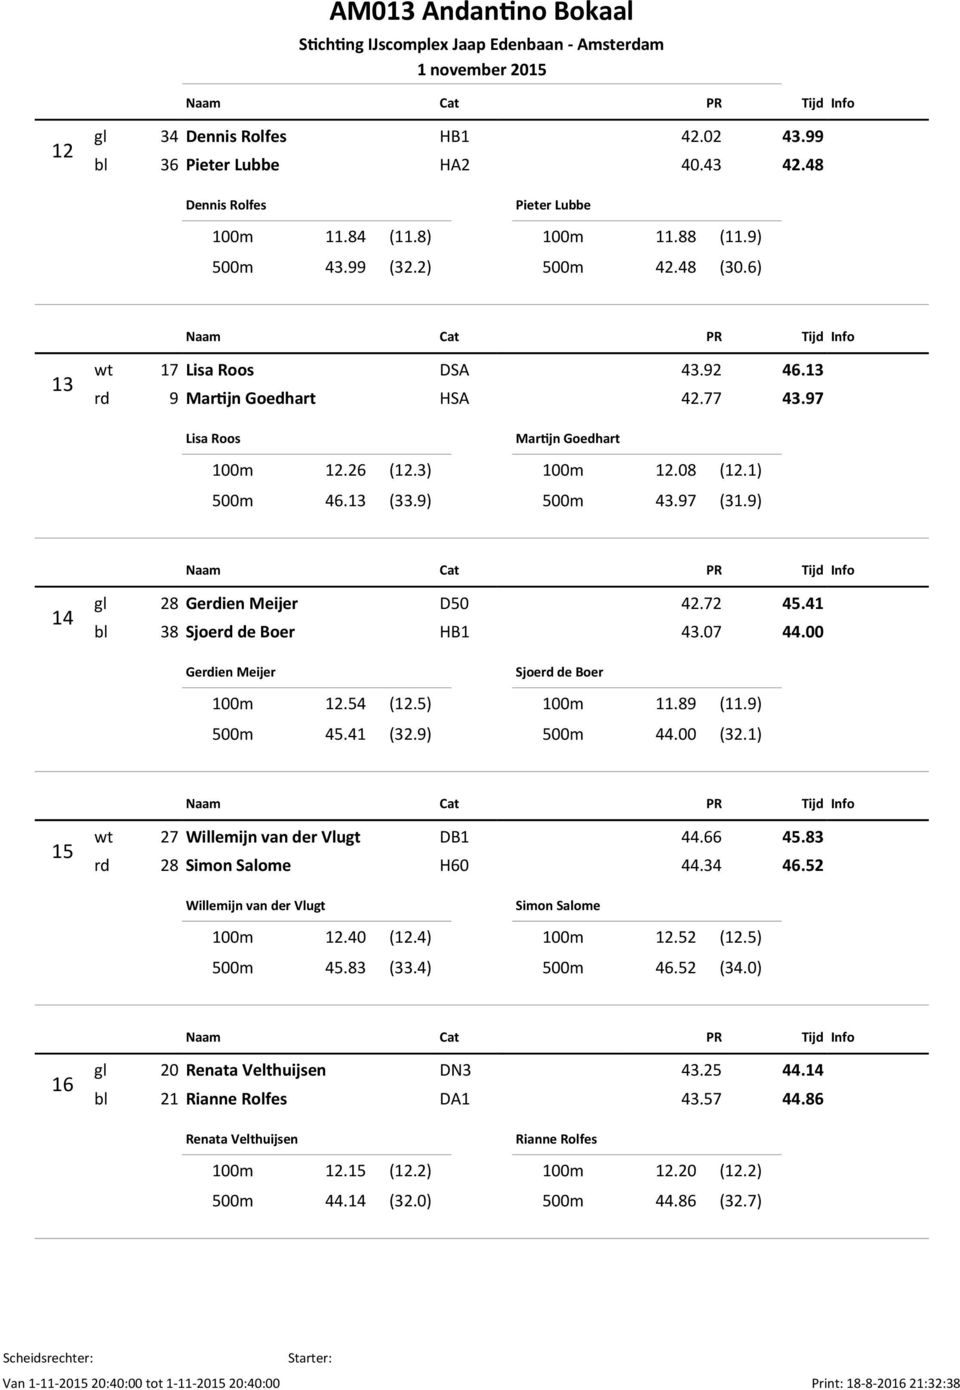 41 bl 38 Sjoerd de Boer HB1 43.07 44.00 Gerdien Meijer 100m 12.54 (12.5) 500m 45.41 (32.9) Sjoerd de Boer 100m 11.89 (11.9) 500m 44.00 (32.1) 15 wt 27 Willemijn van der Vlugt DB1 44.66 45.